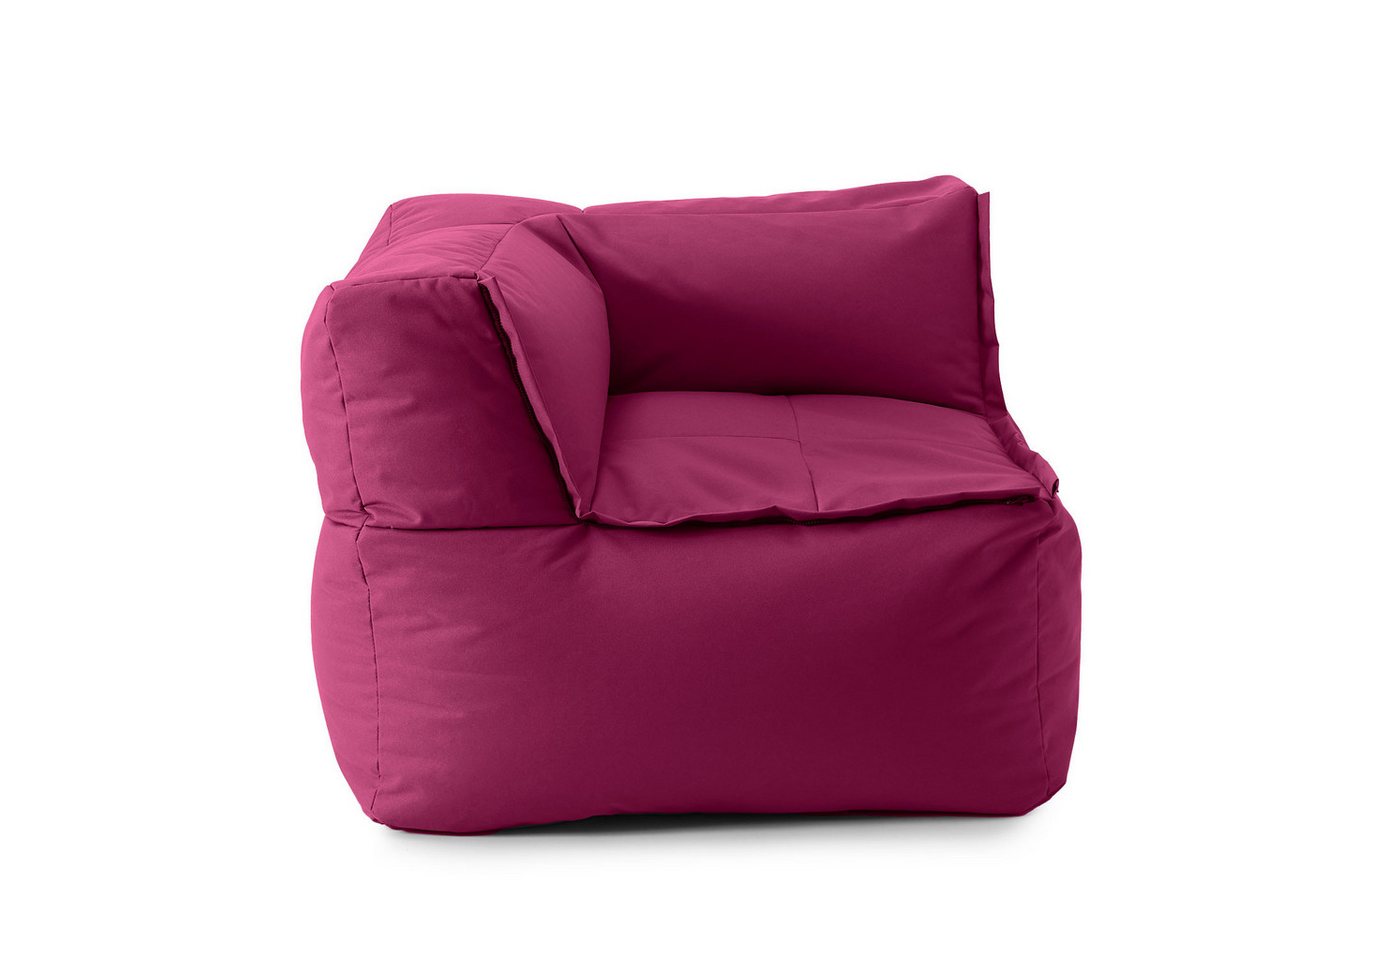 Lumaland Loungeset In- & outdoor Sofa individuell kombinierbar mit dem Modularen System, Sessel wasserfest abnehmbarer Bezug erweiterbar waschbar von Lumaland